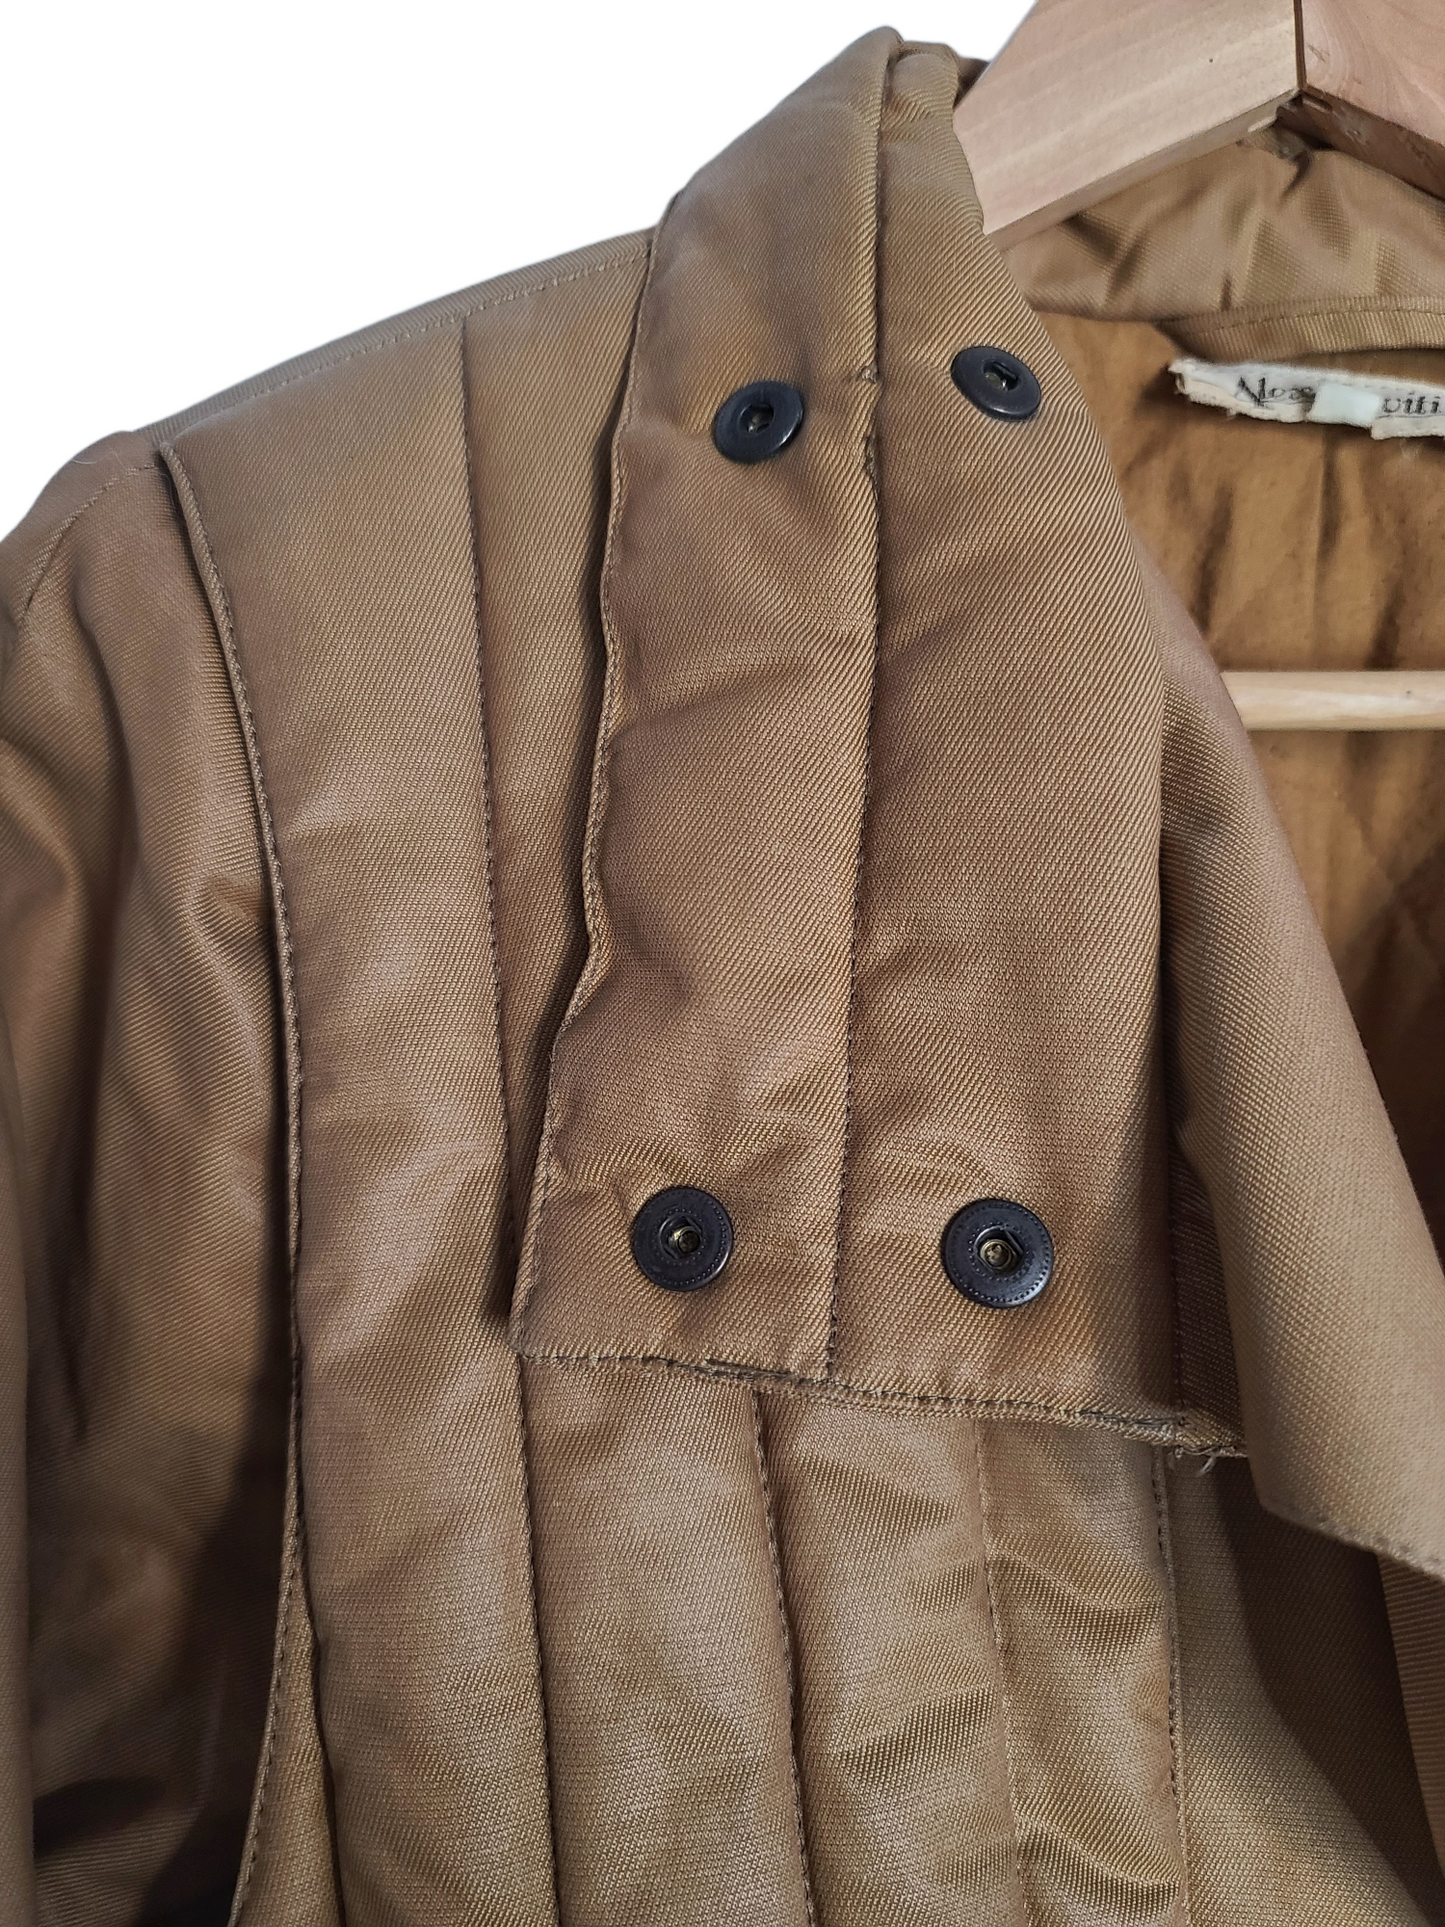 Acubi dystopian vintage coat